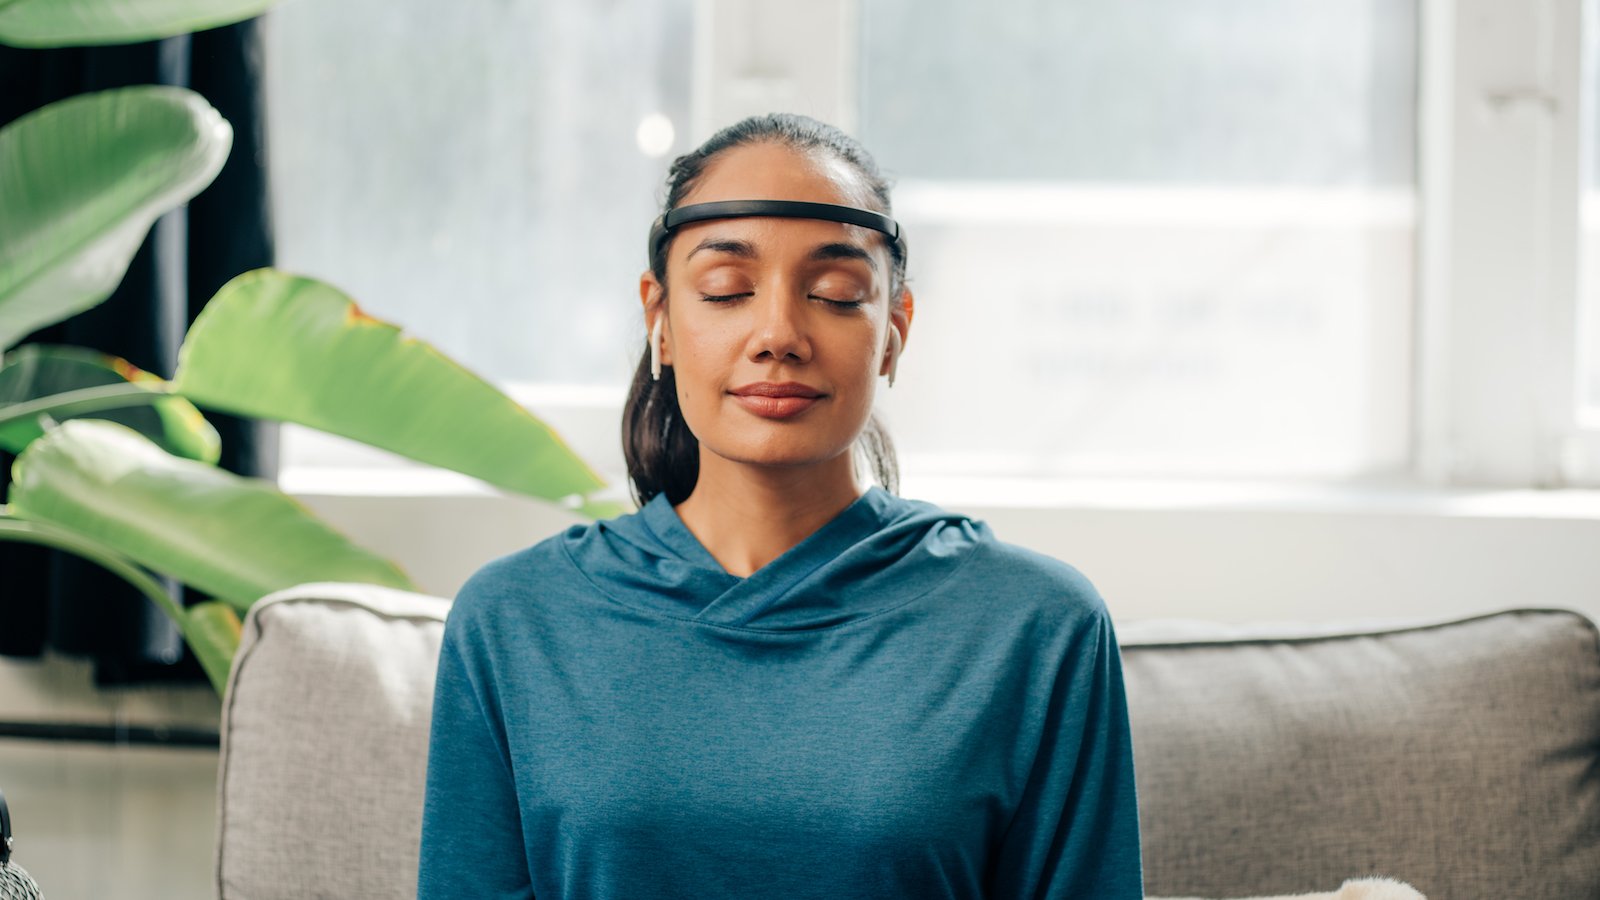 Muse 2 Meditation Headband monitors your breathing technique